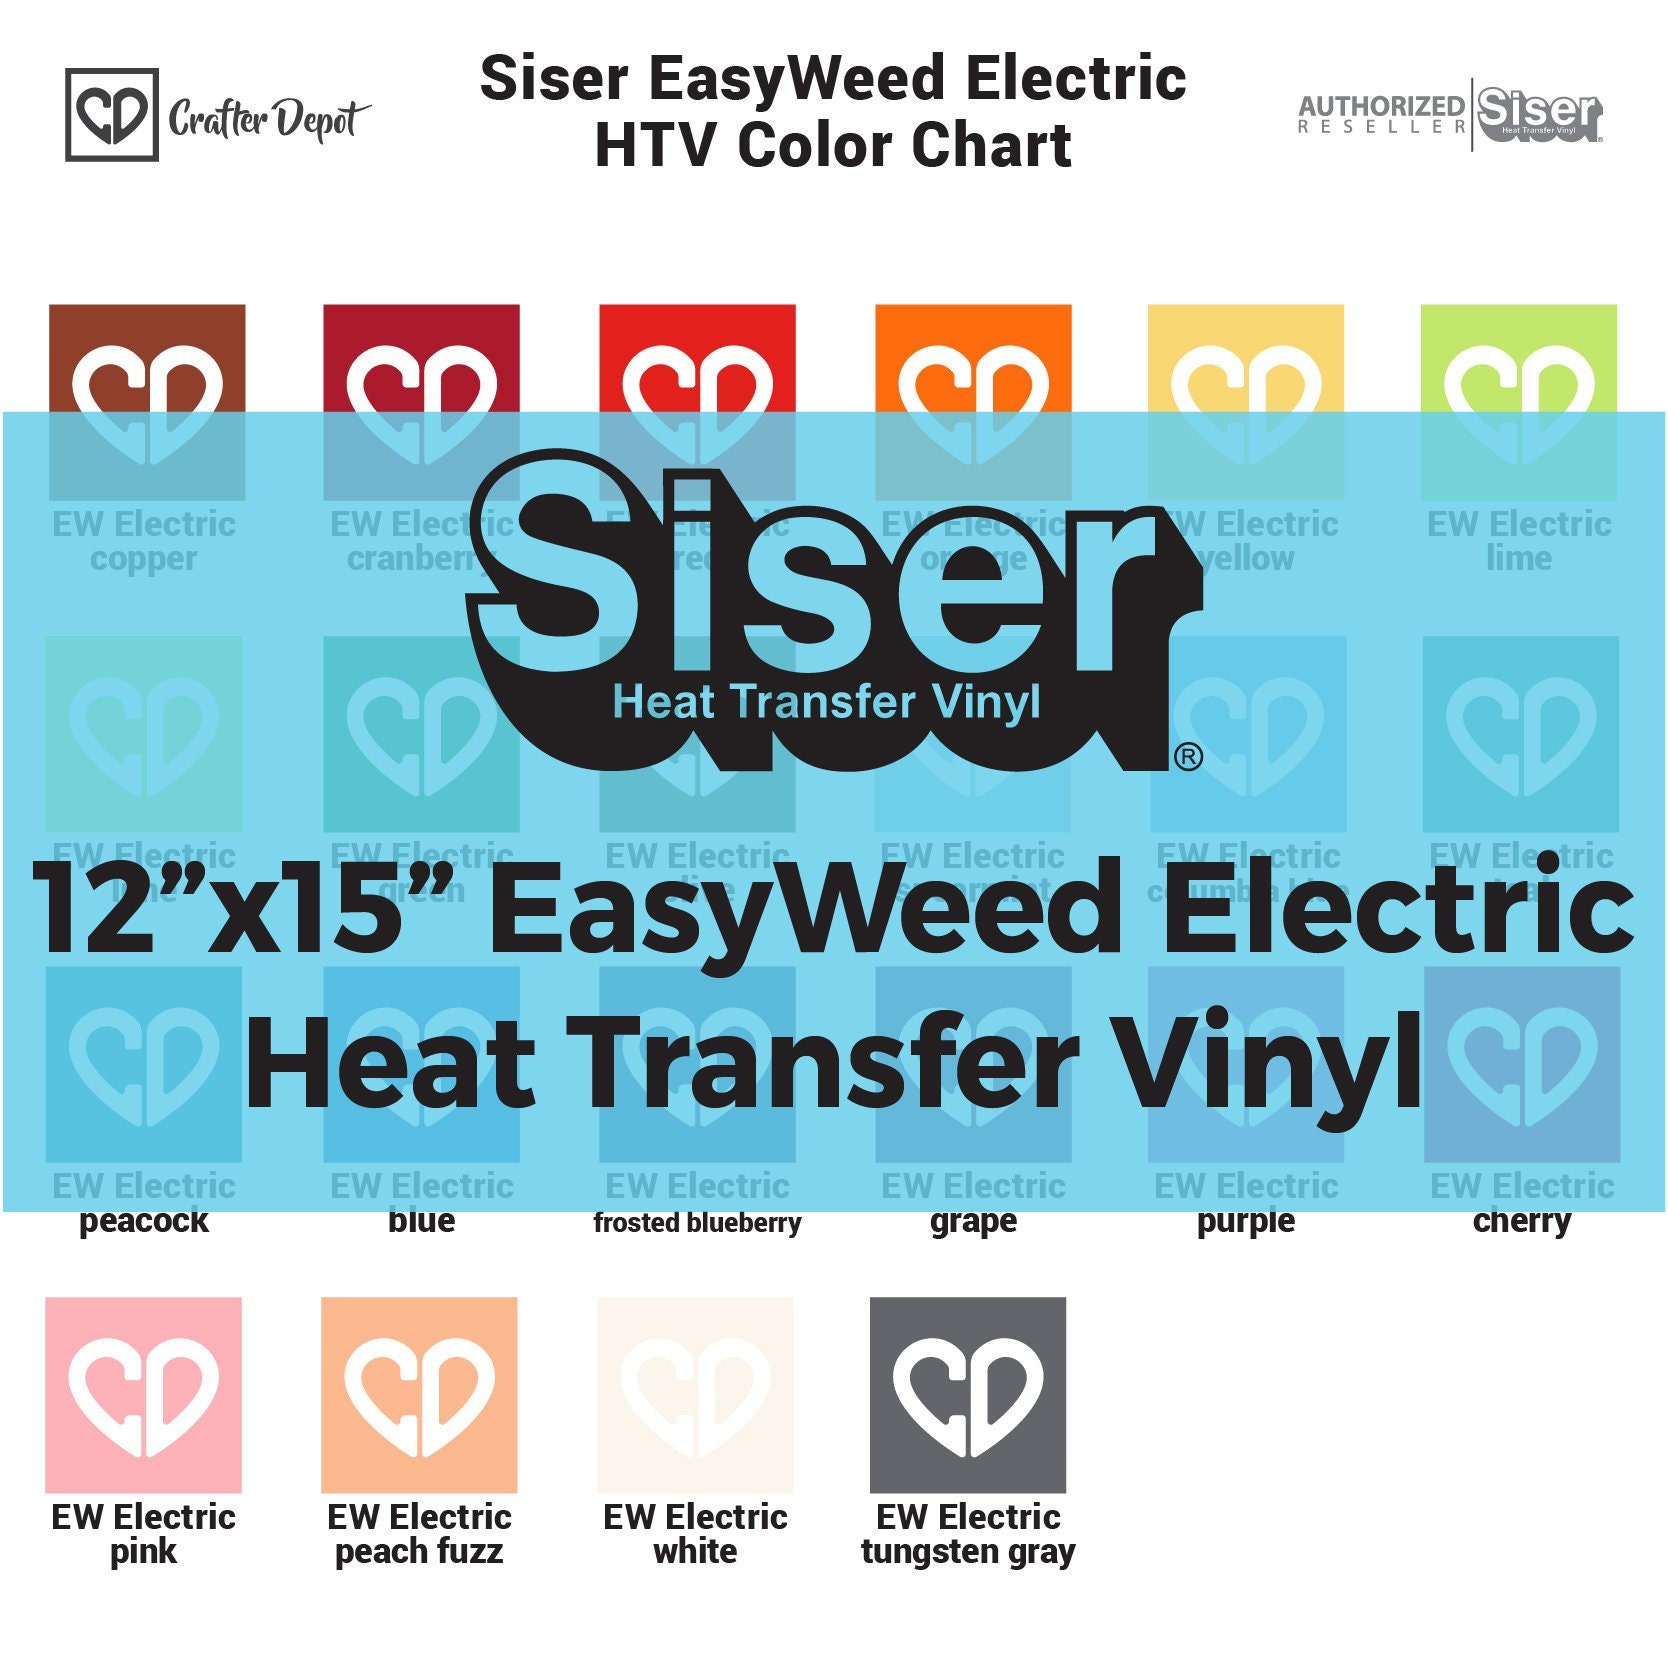 Siser EasyWeed Electric HTV - Teal